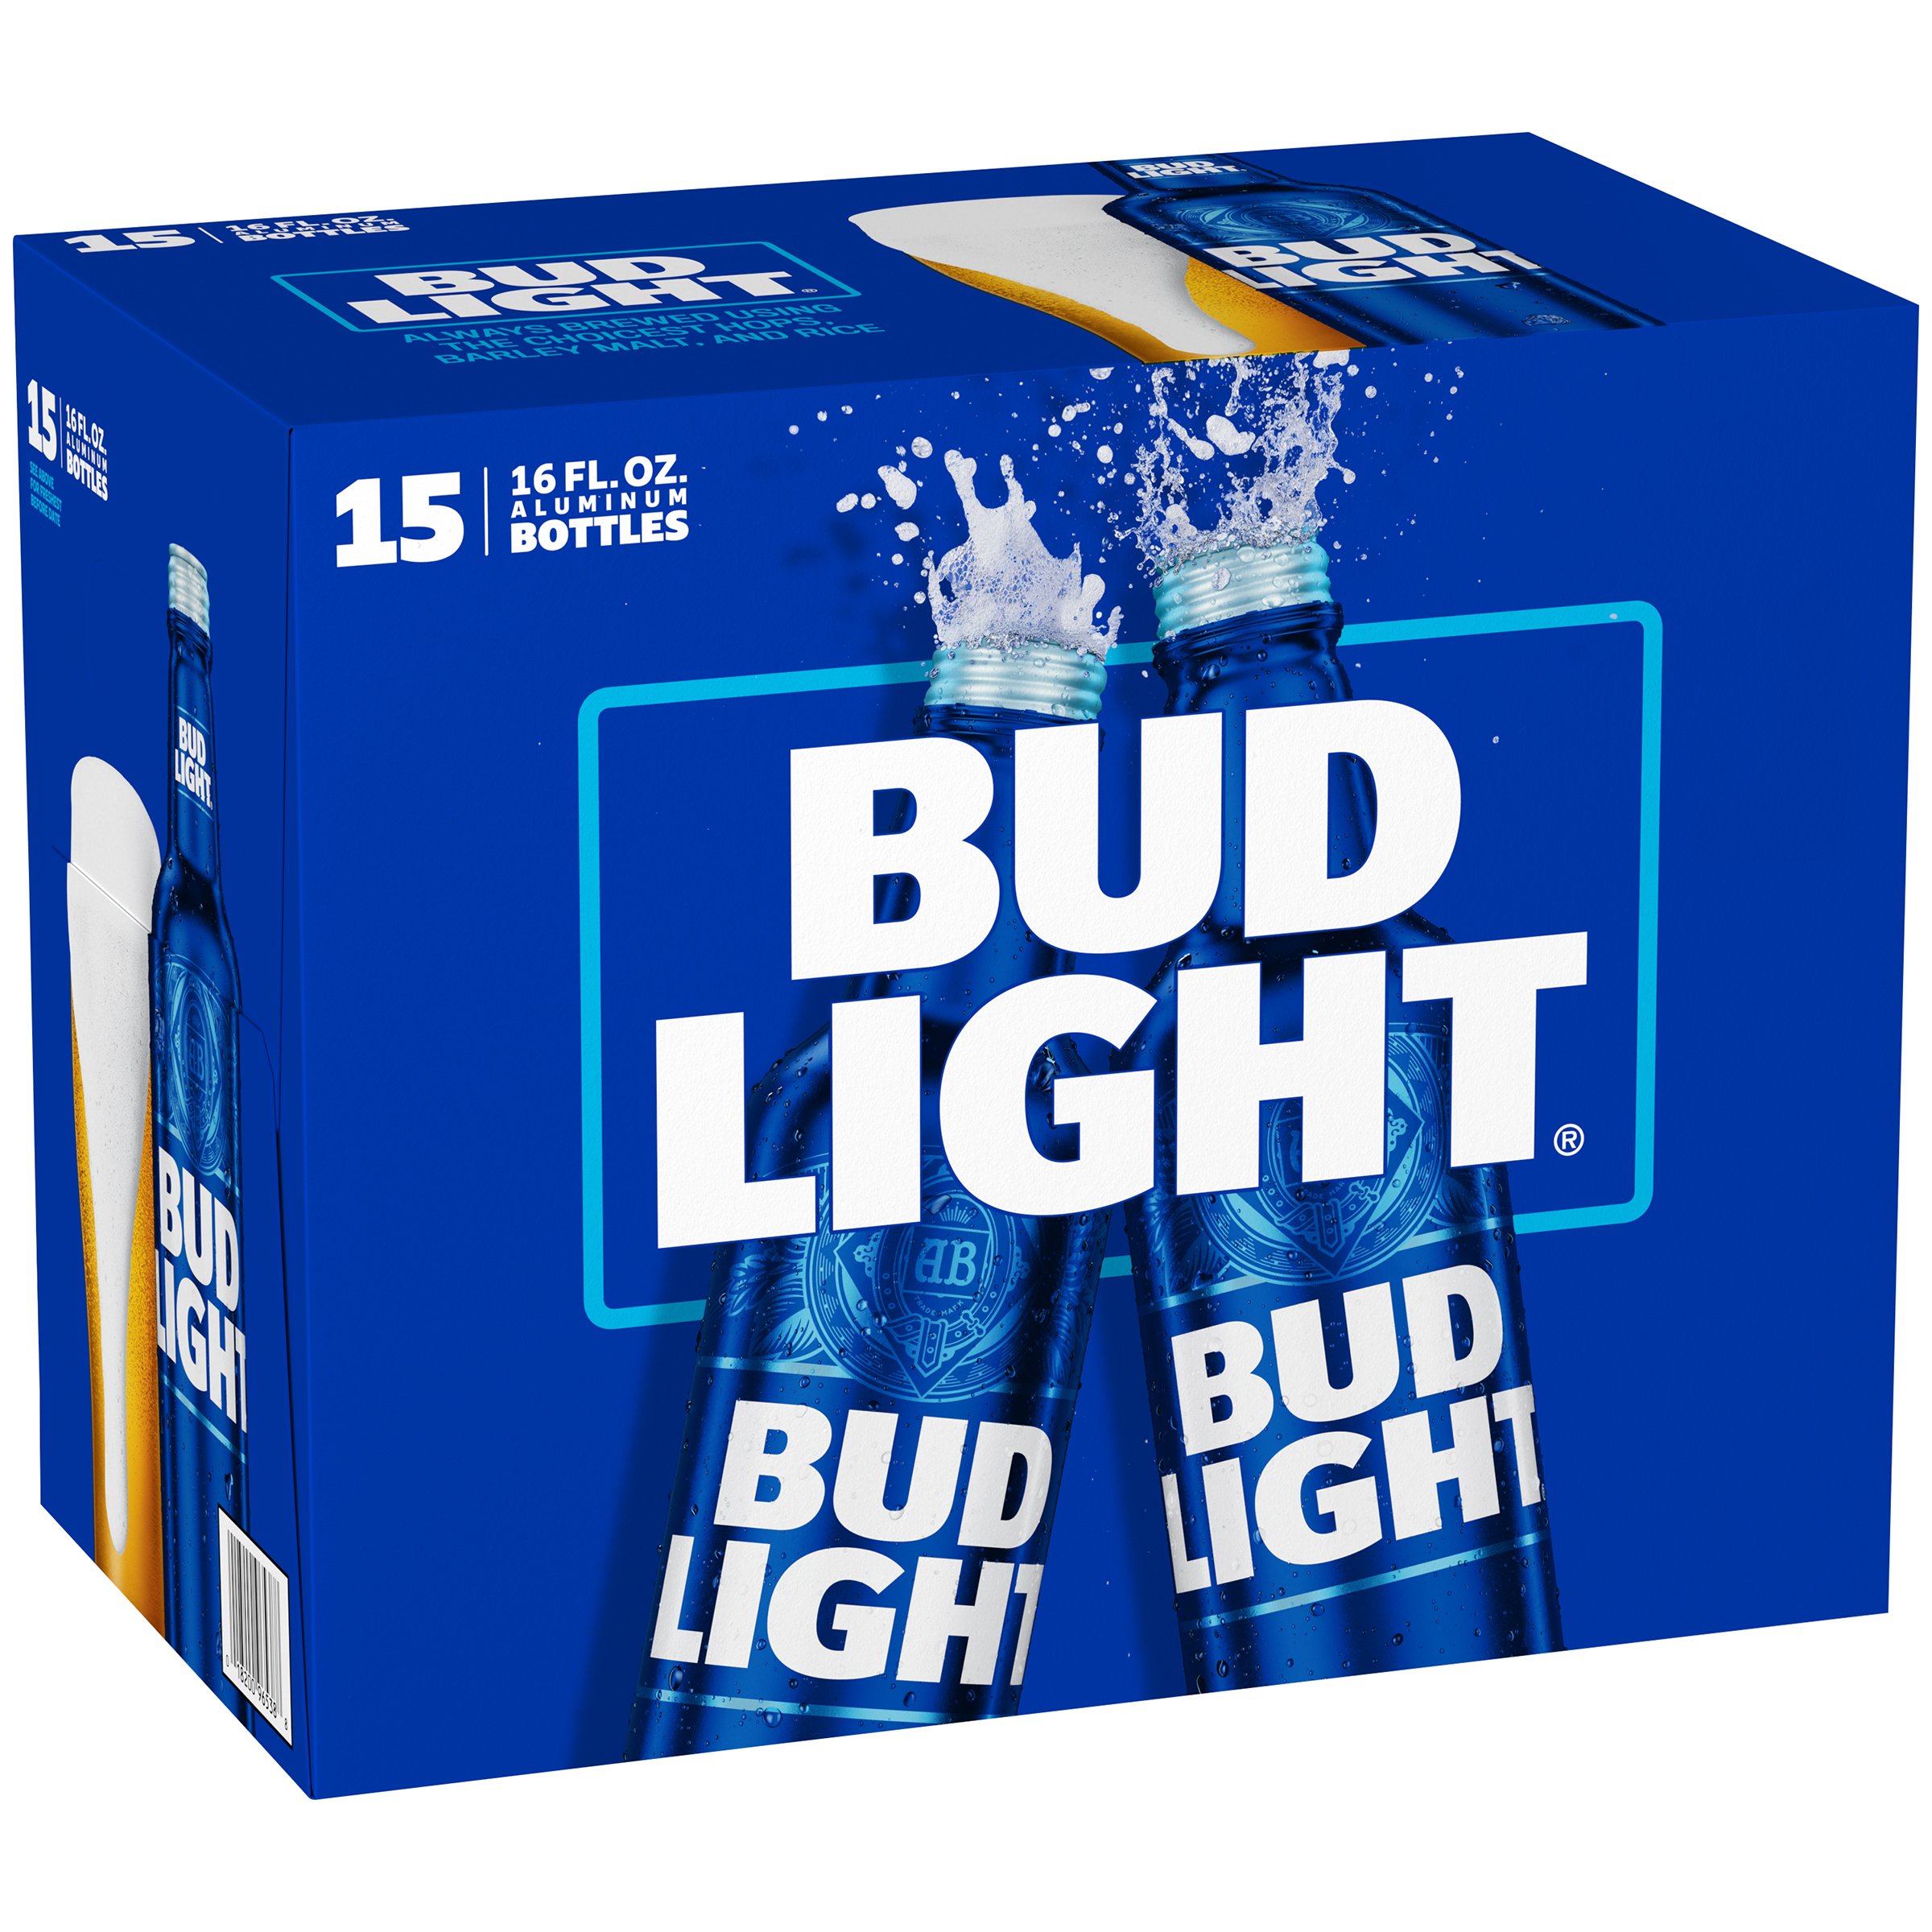 Bud Light 16 oz Aluminum Bottles Shop Beer at H-E-B